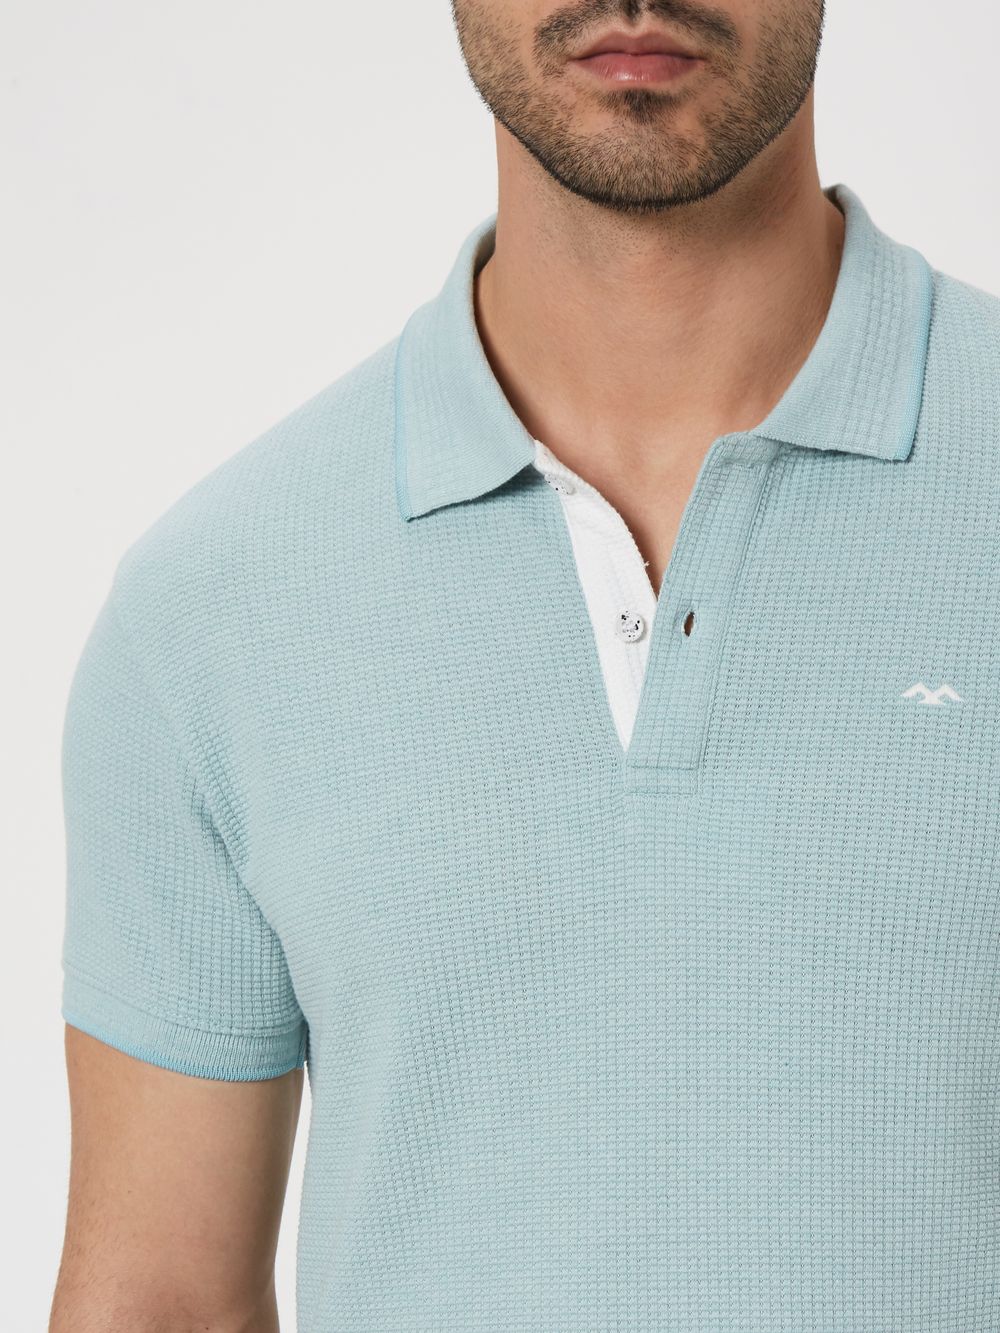 Light Blue & White Jacquard Textured Jersey Polo T-Shirt